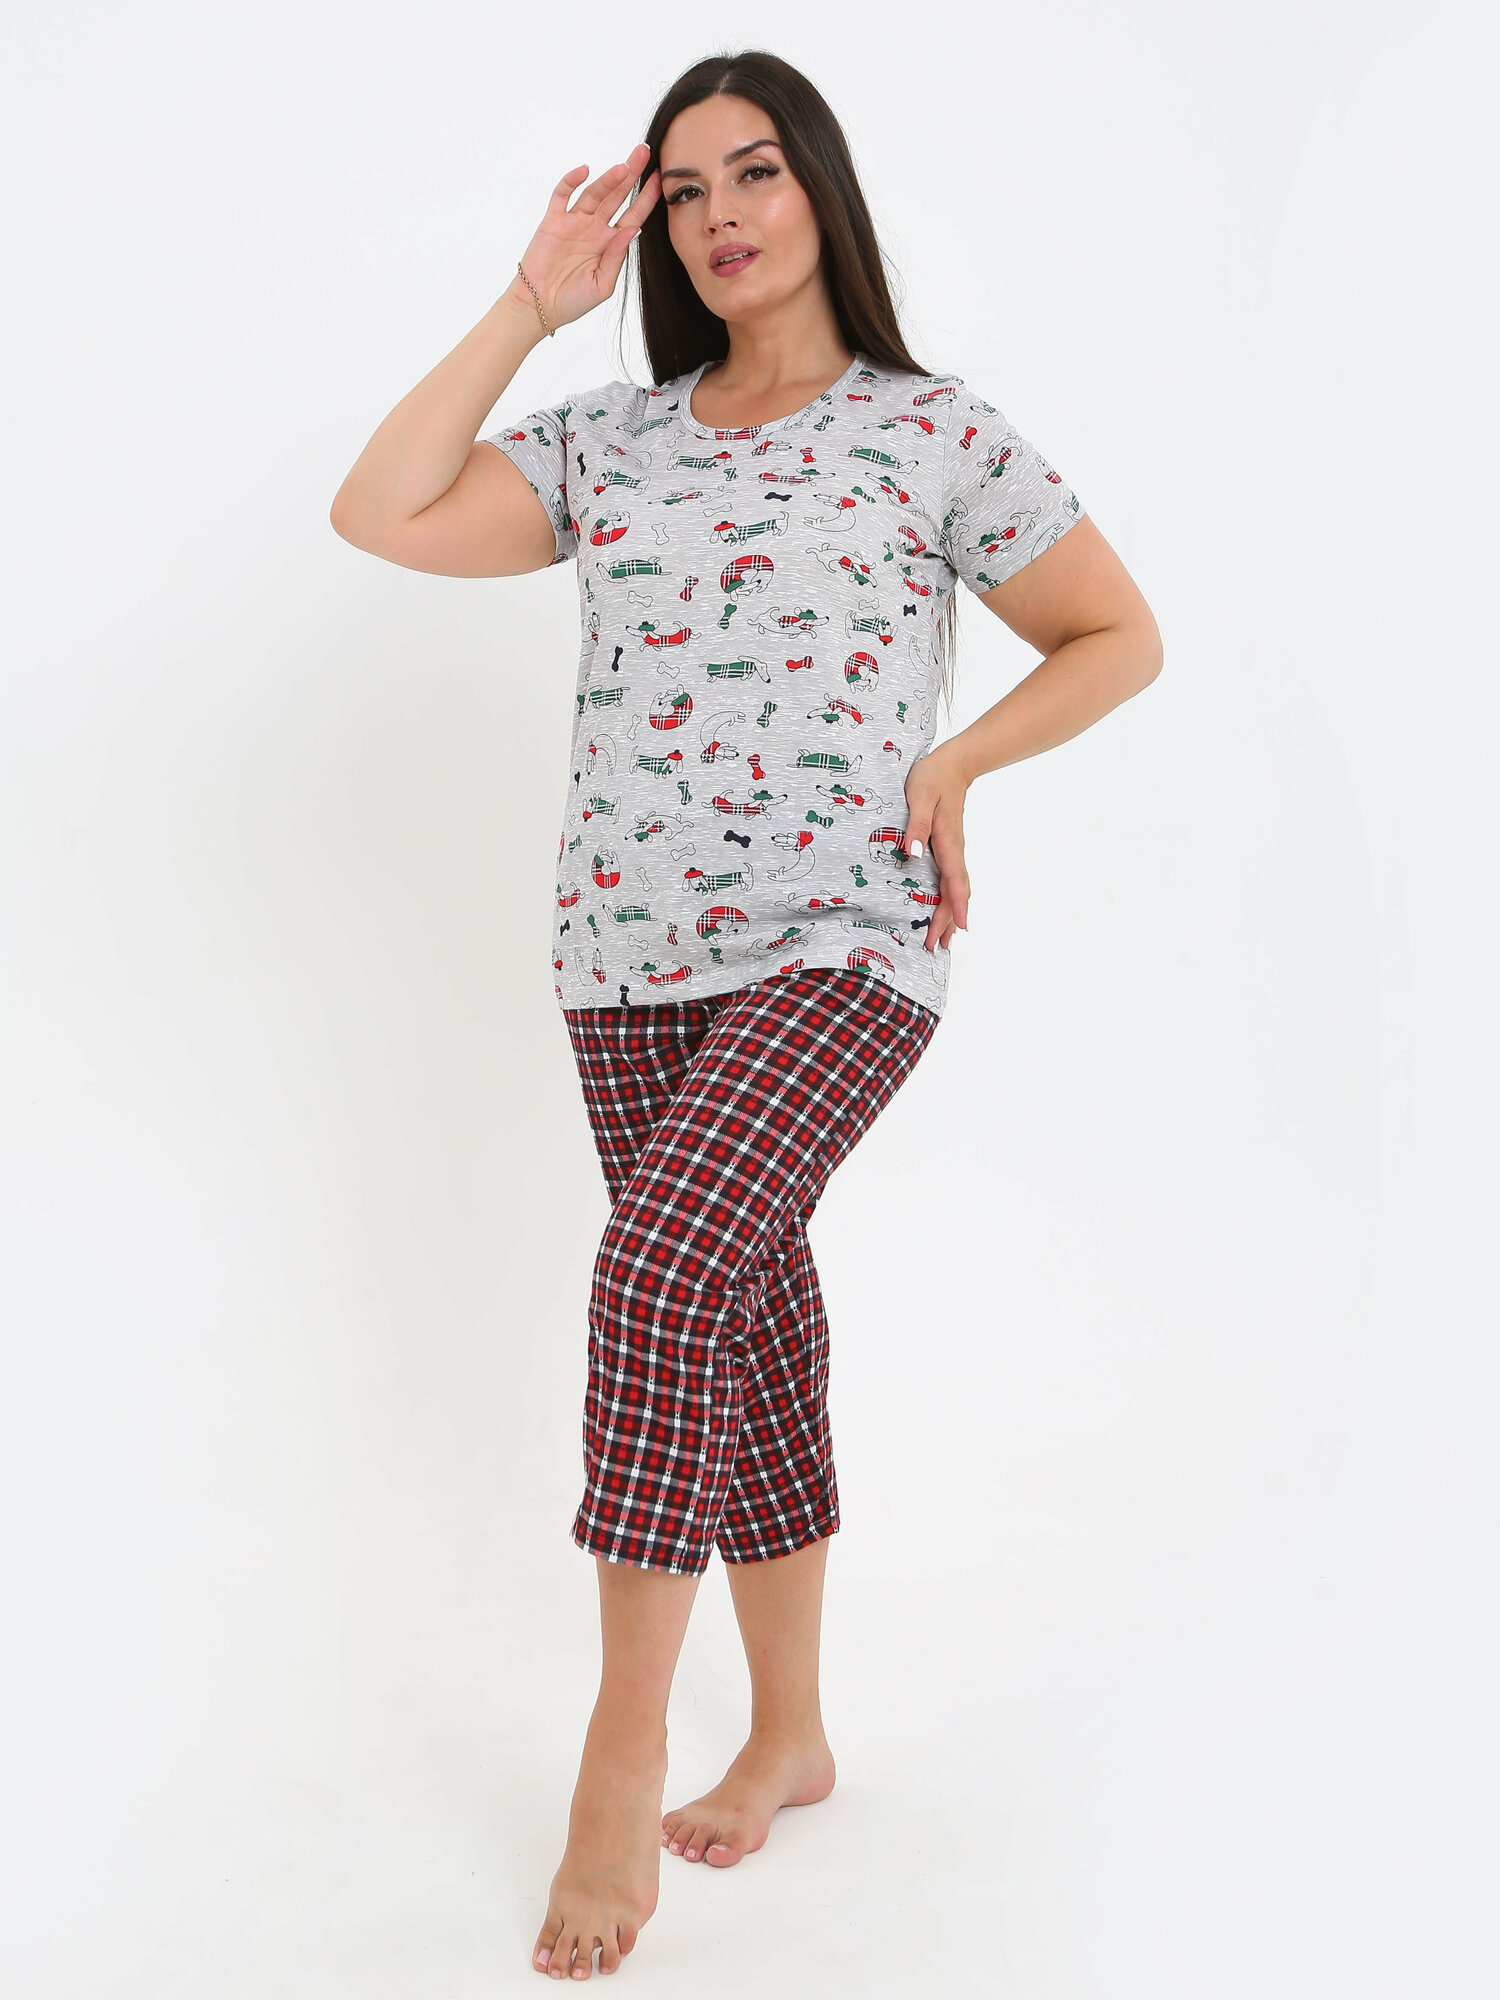 Пижама Soft Home, футболка, бриджи, короткий рукав, трикотажная, карманы, размер 52, серый - фотография № 3